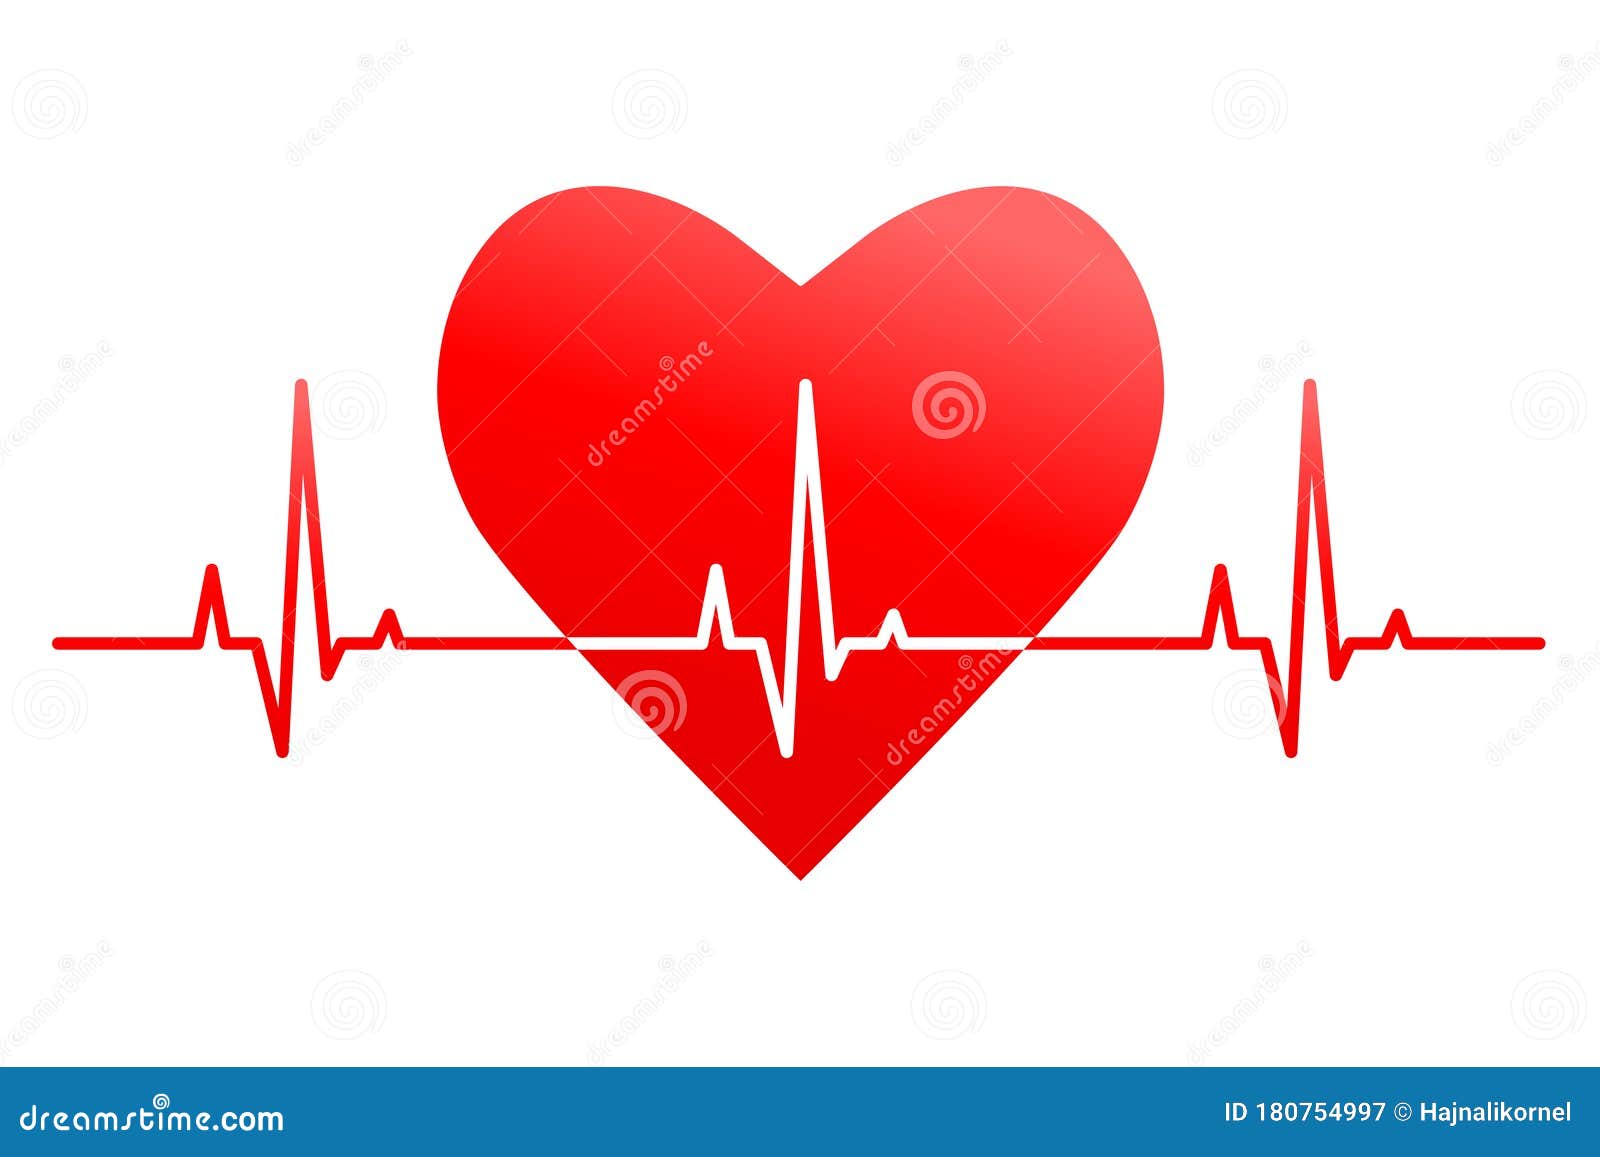 Heartbeat, Life Signal and Rhythm Concept Stock Vector ...